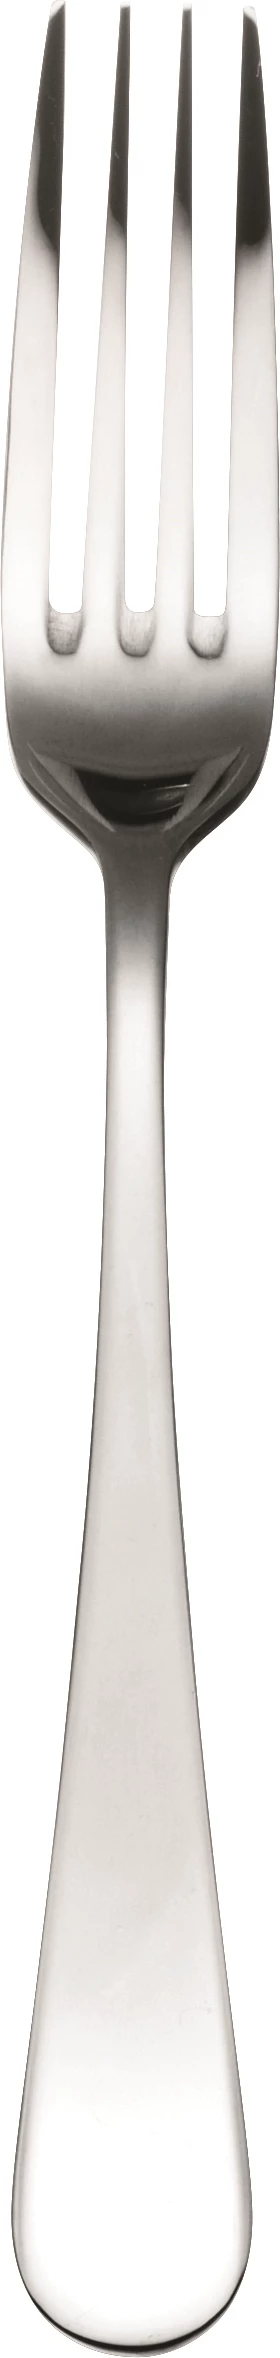 Pantheon spisegaffel, 20,8 cm